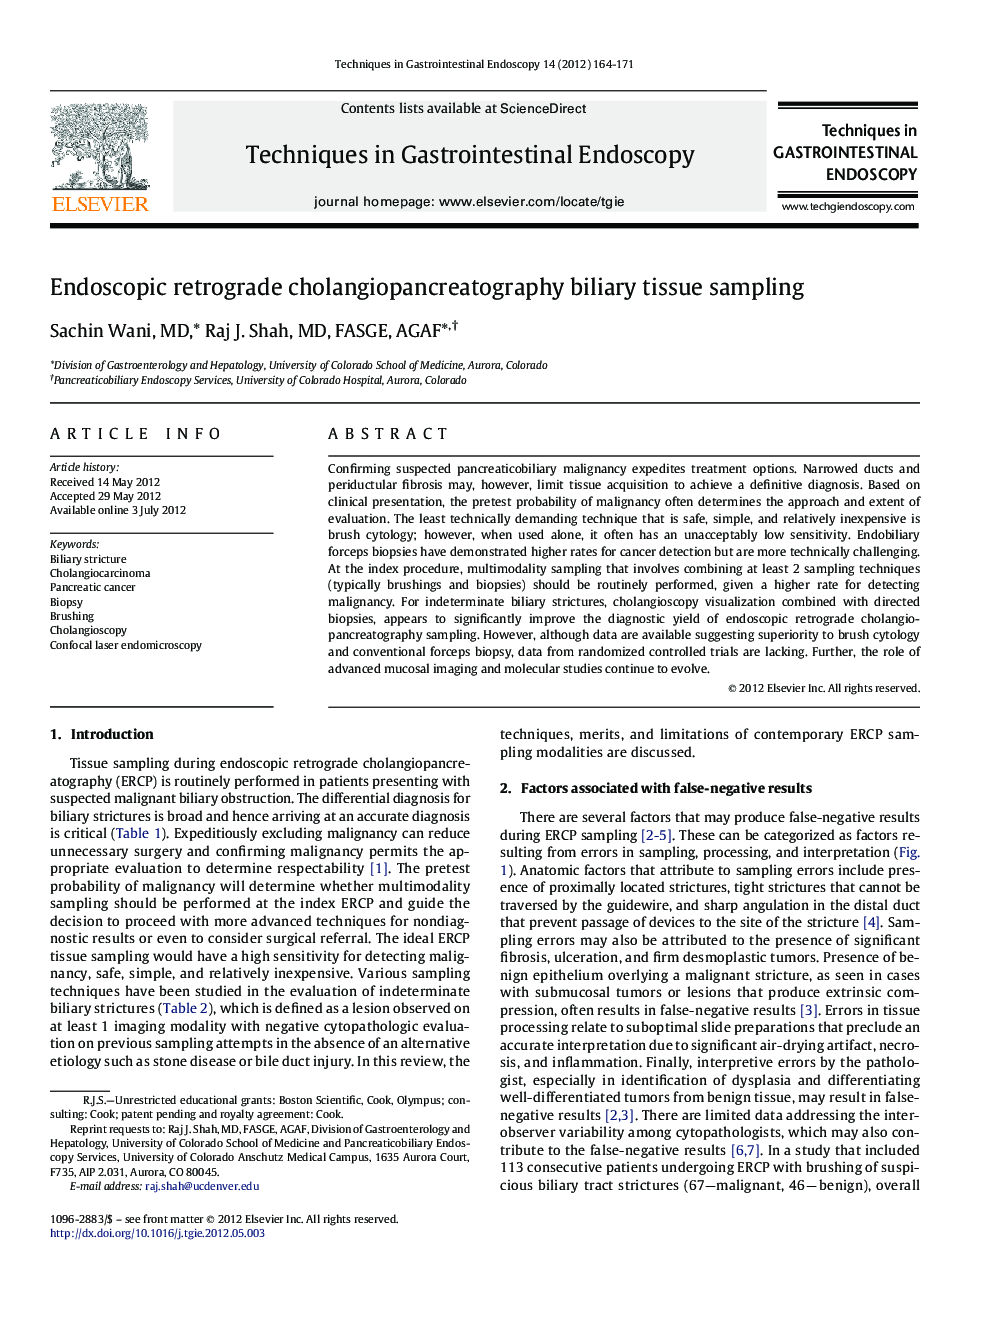 Endoscopic retrograde cholangiopancreatography biliary tissue sampling